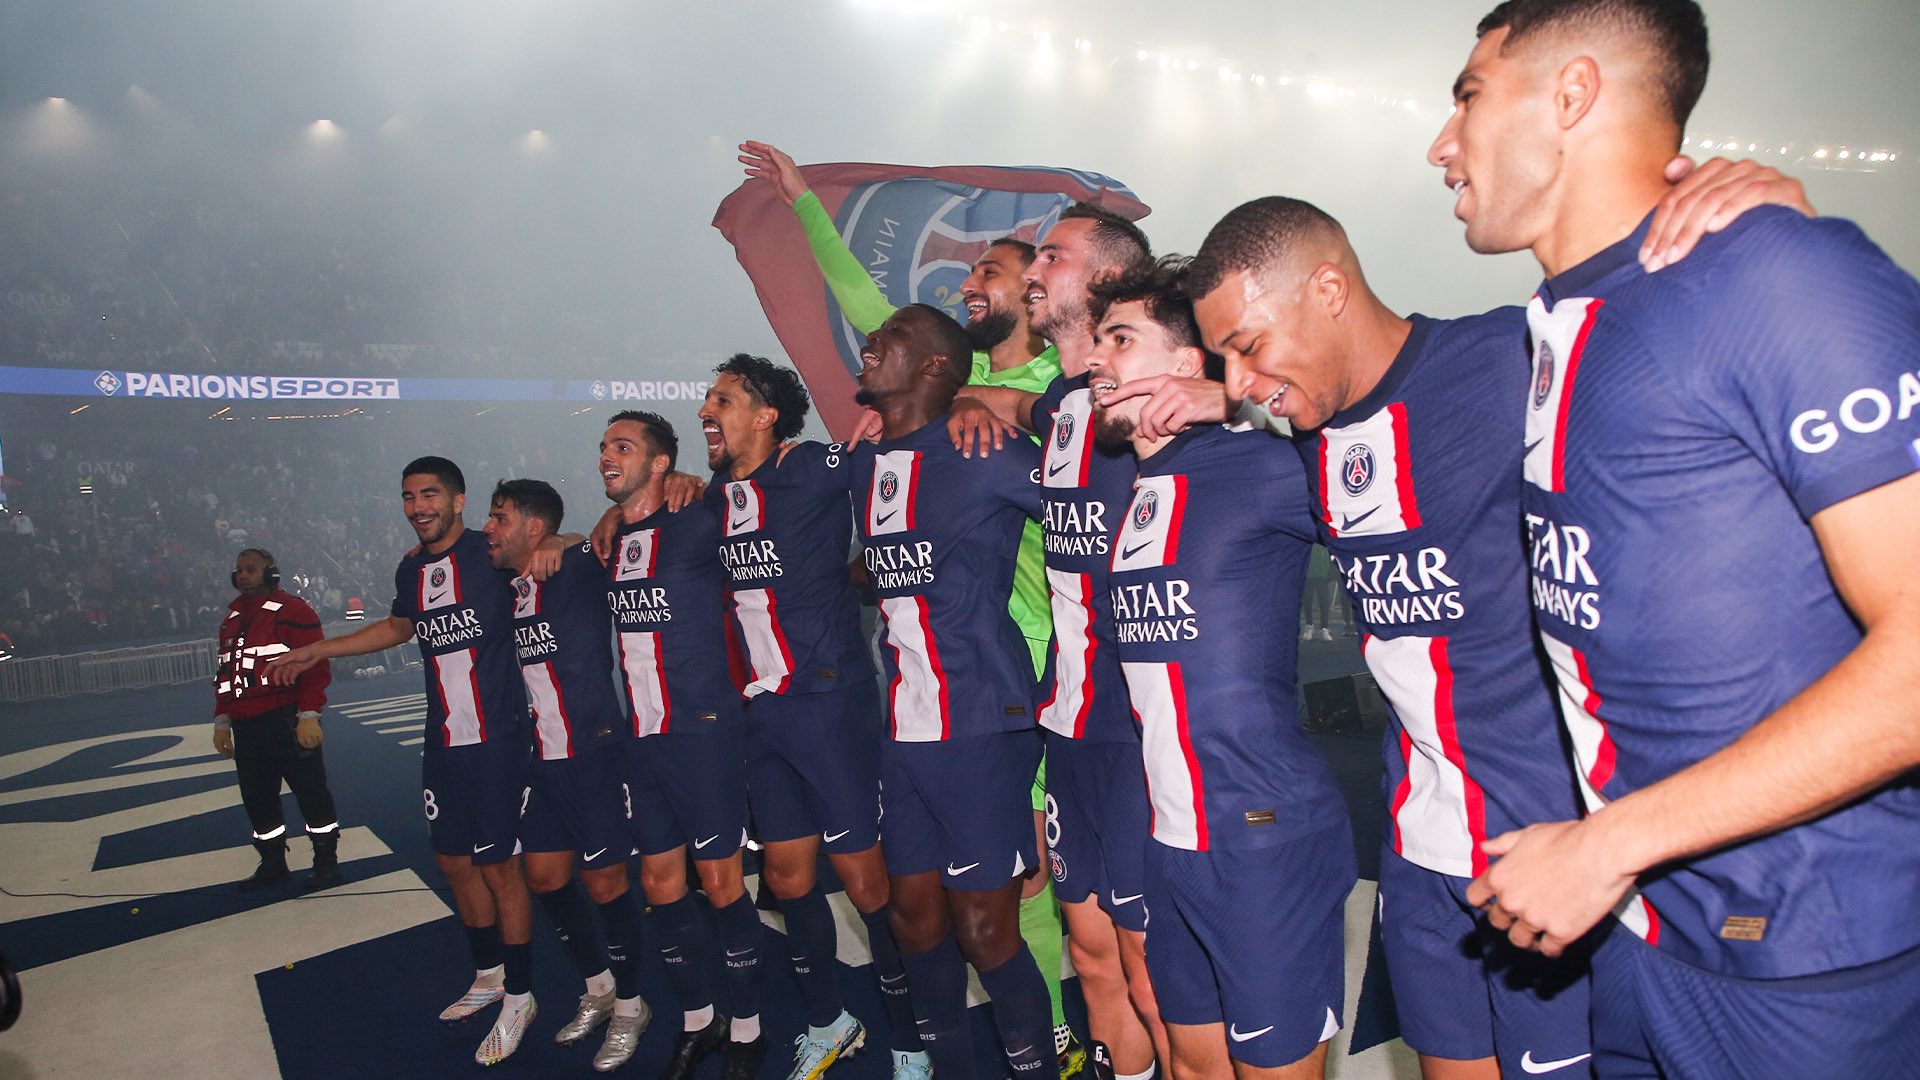 PSG vs Marseille HIGHLIGHTS: PSG bank on Neymar's winner to edge past Marseille - Check HIGHLIGHTS